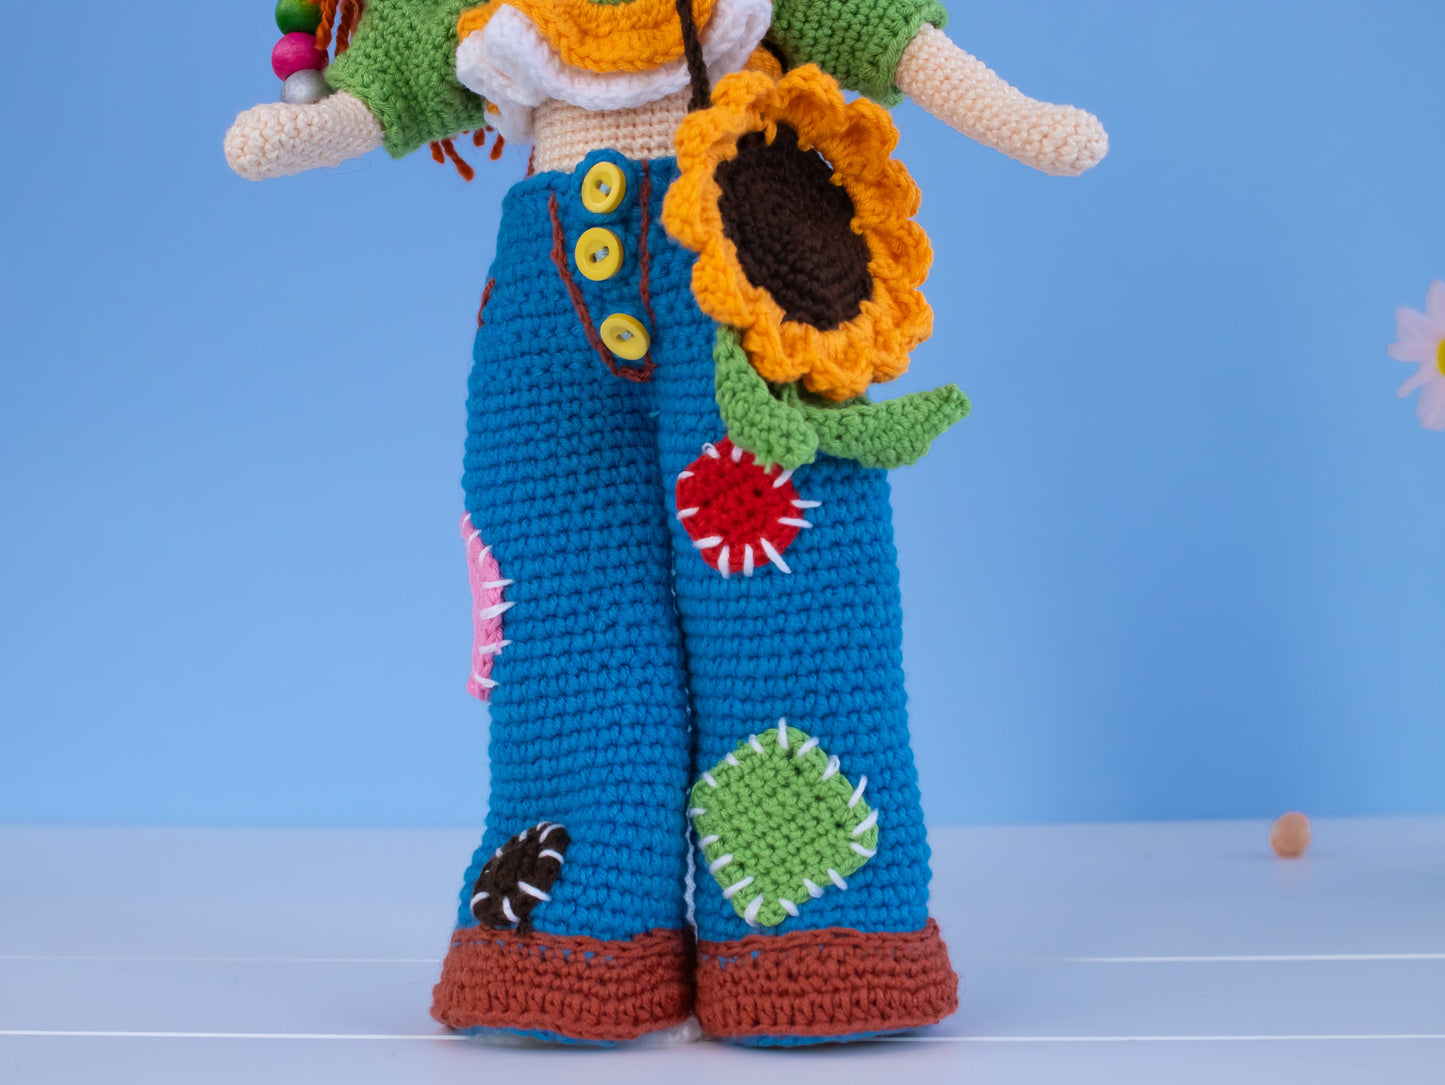 Crochet Doll, Crochet Amigurumi, Knitted Doll, Amigurumi Doll, Granddaughter Gift, Crocheted Dolls, Handmade Doll, Homemade Doll, Girl Gift